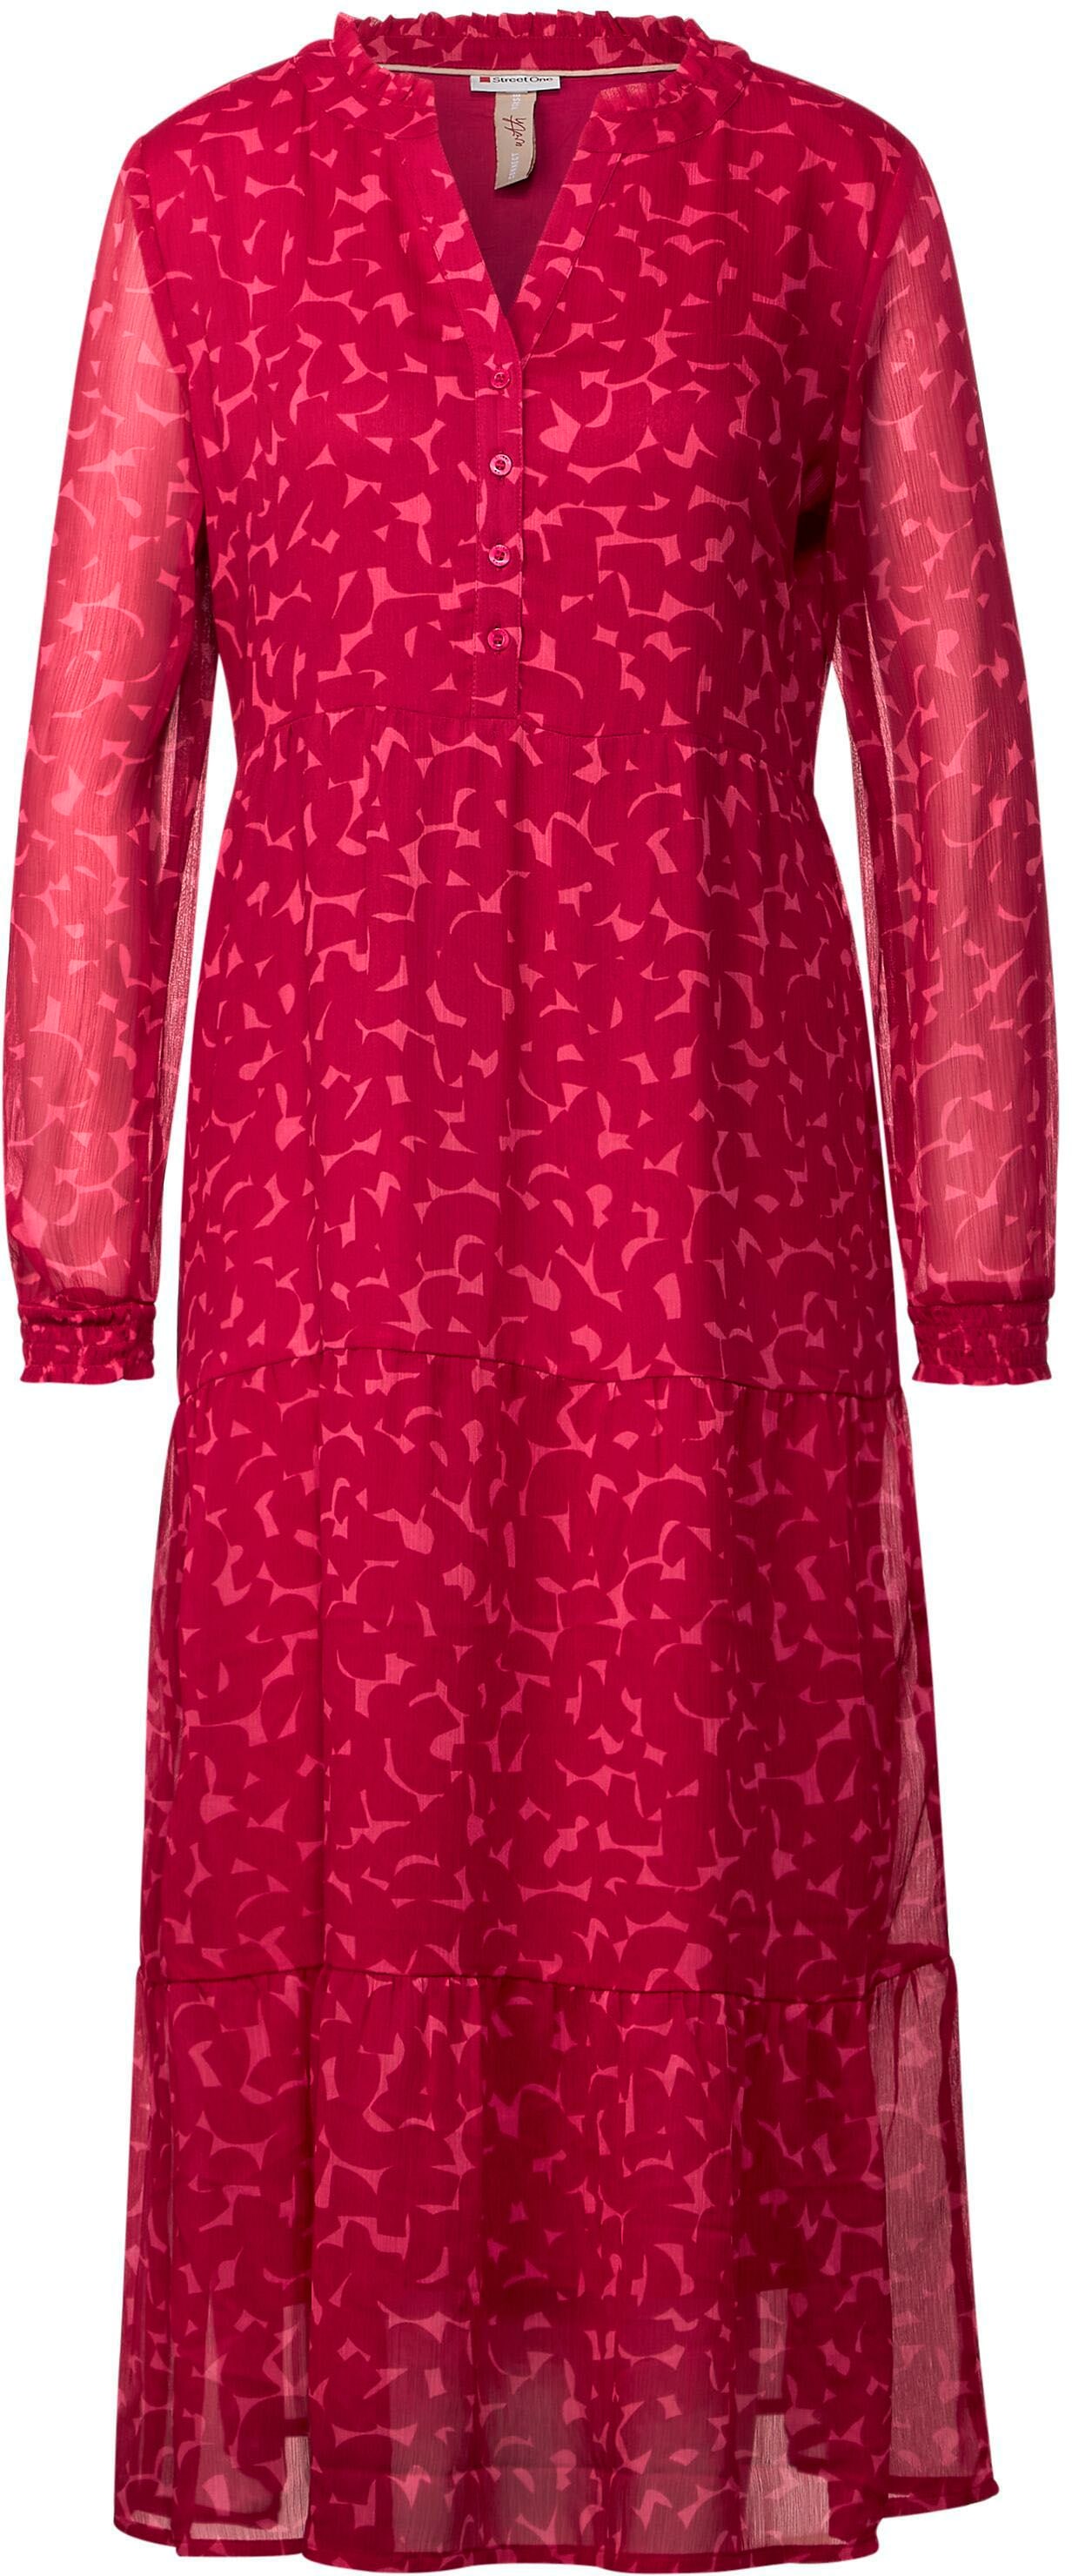 STREET ONE Chiffonkleid »Chiffon Tunic Dress«, mit Allover-Print kaufen